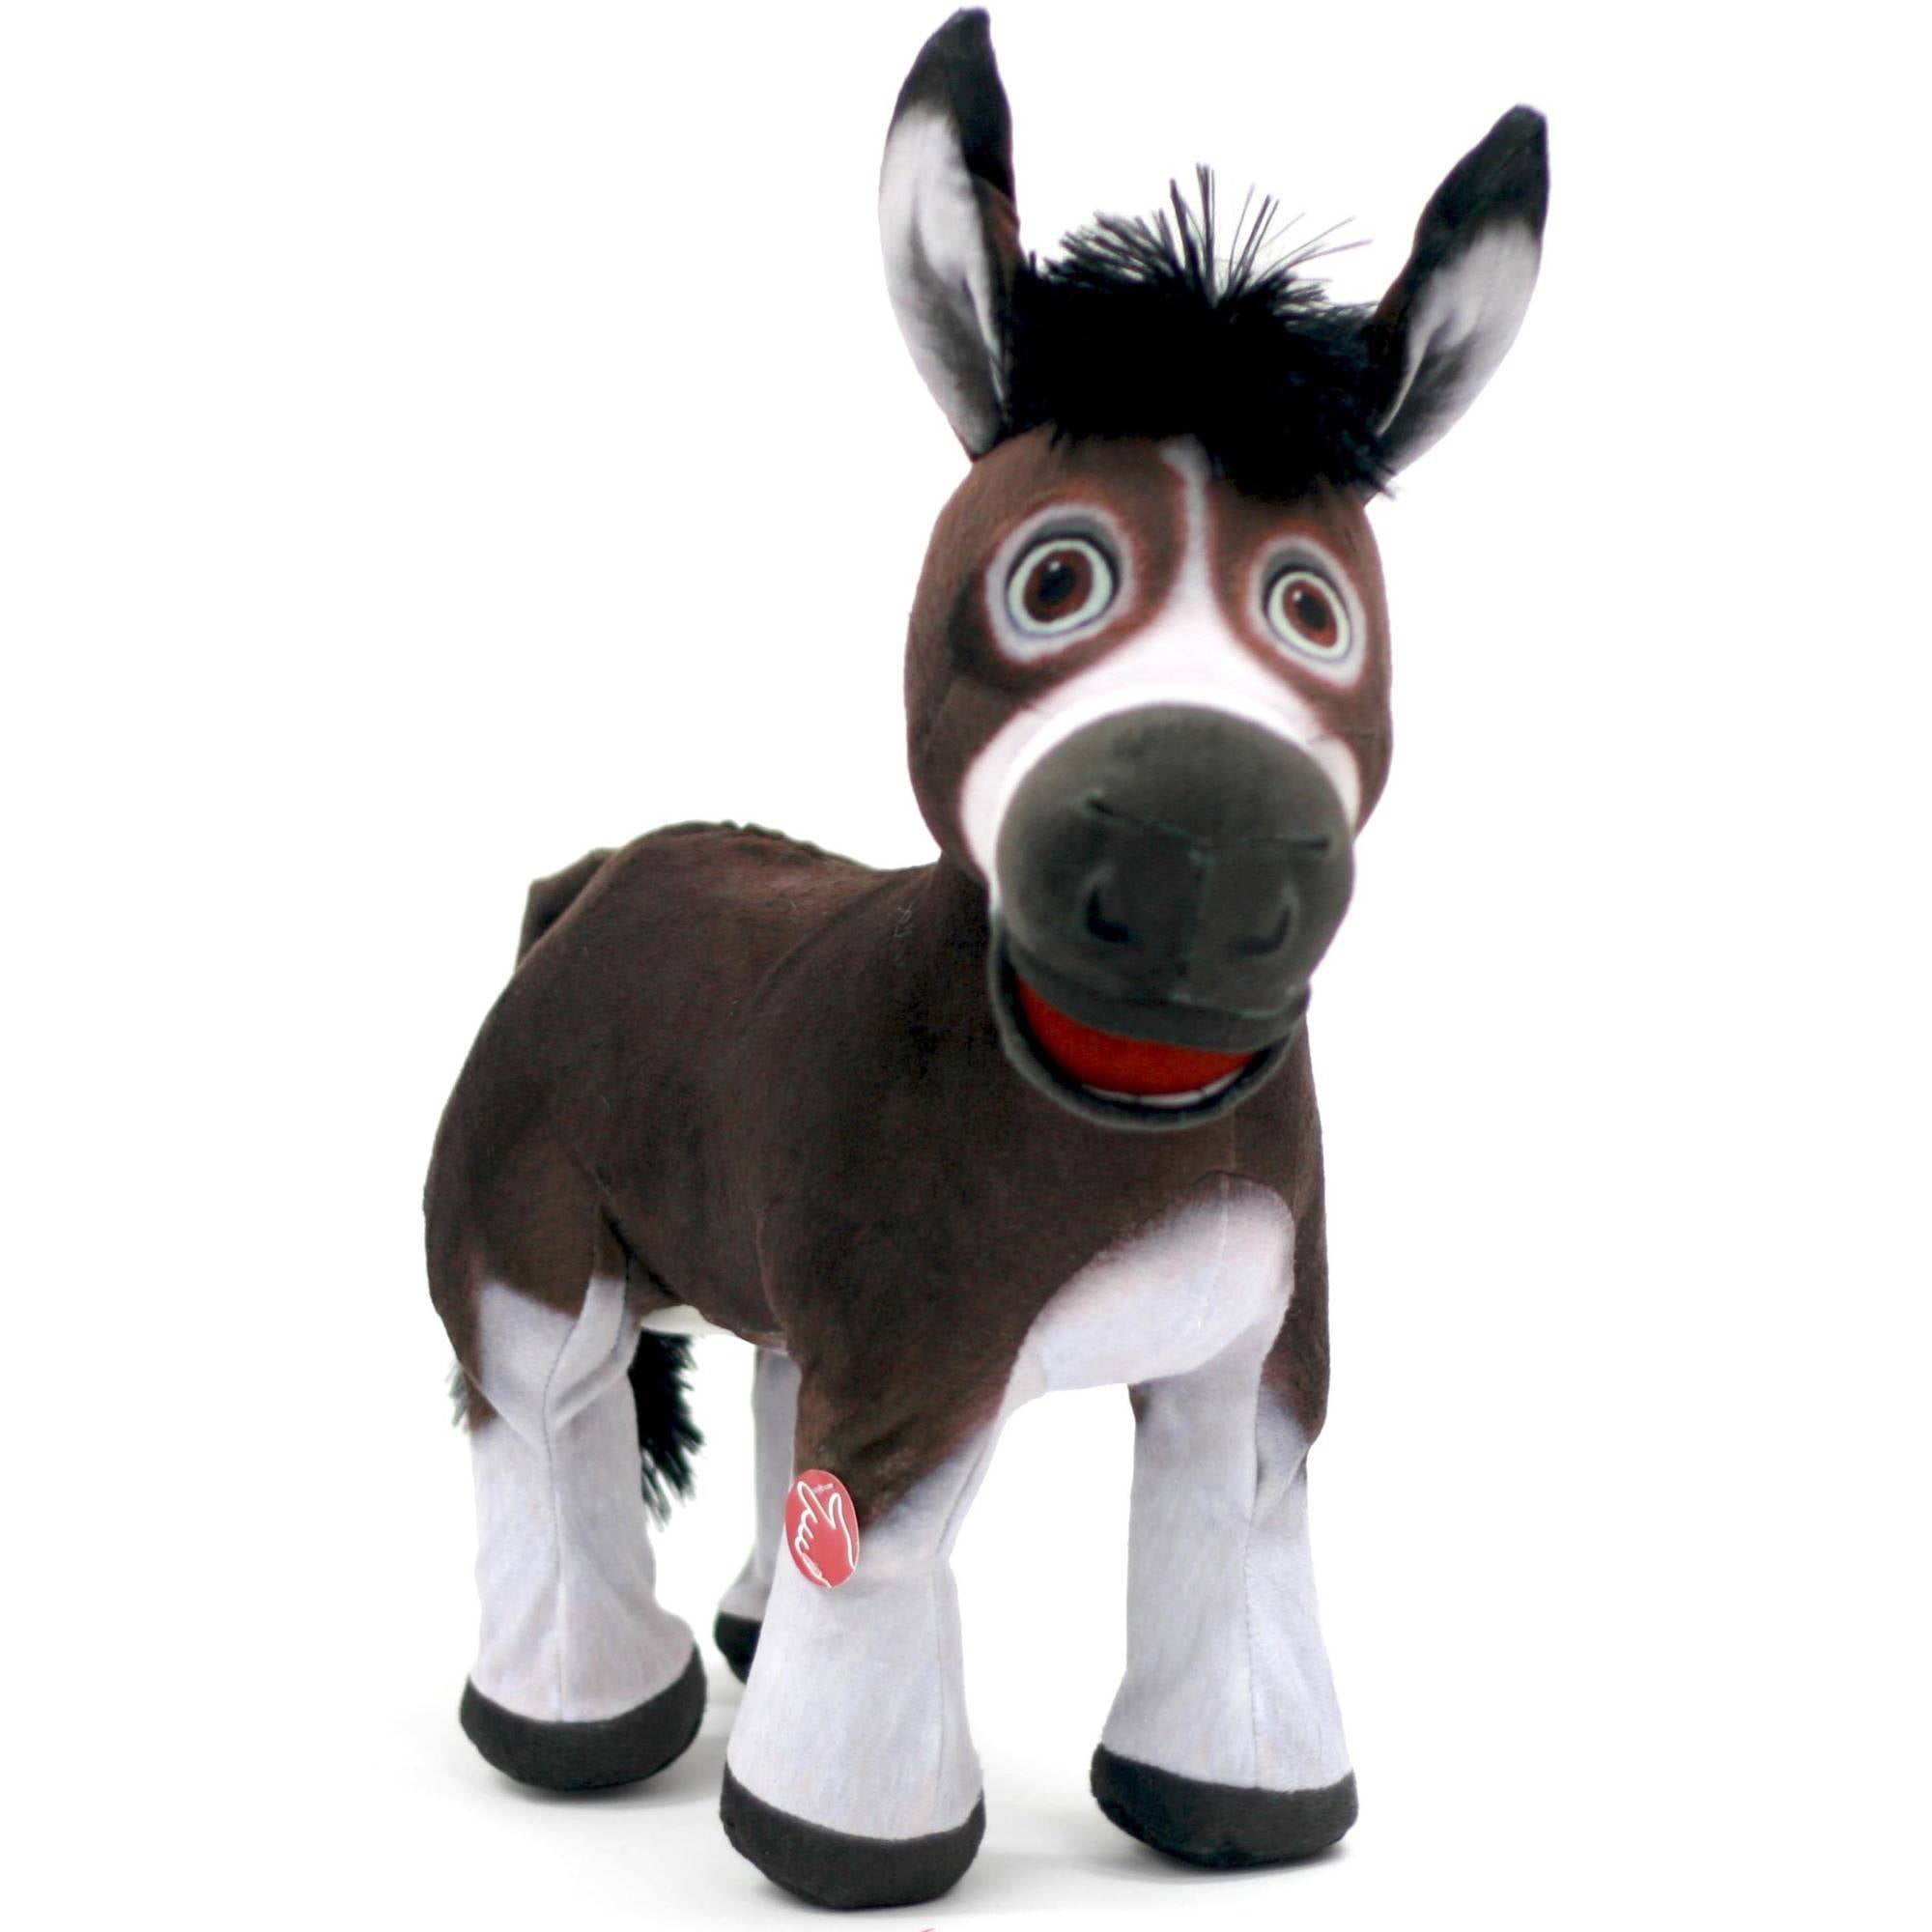 The Star Movie Toys, 10-inch Bo the Donkey Animated Plush Toy 